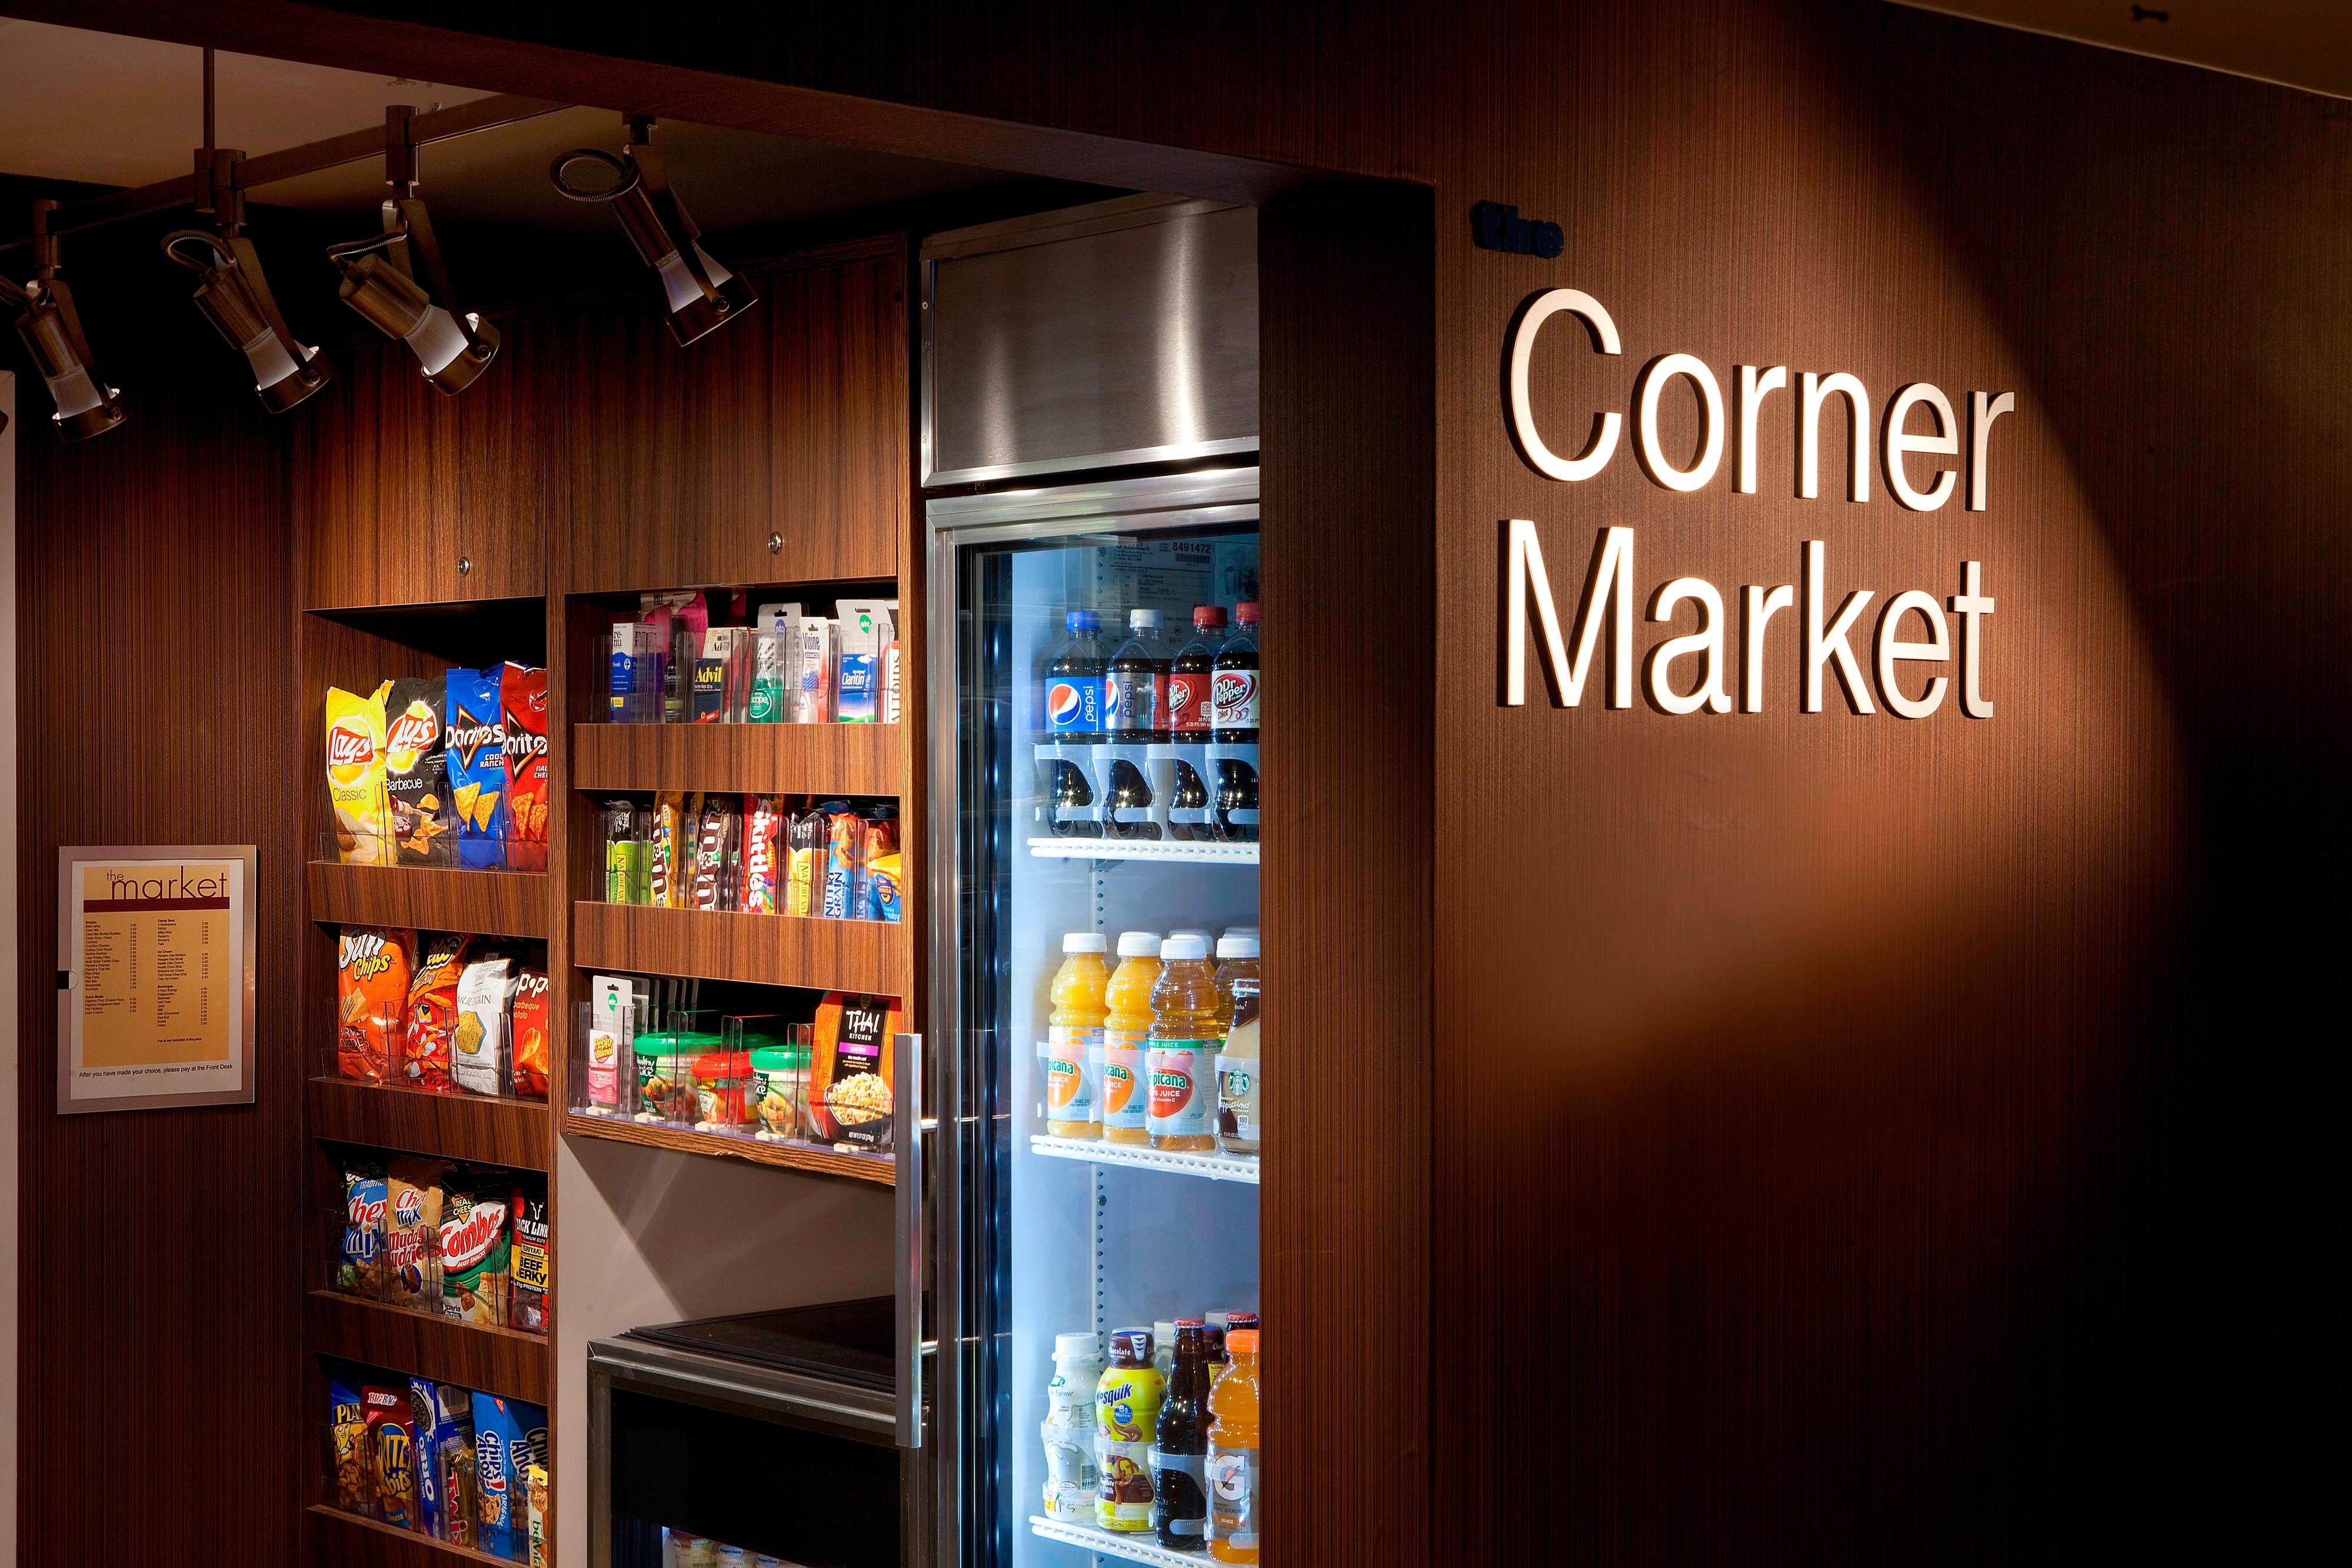 The Corner Market